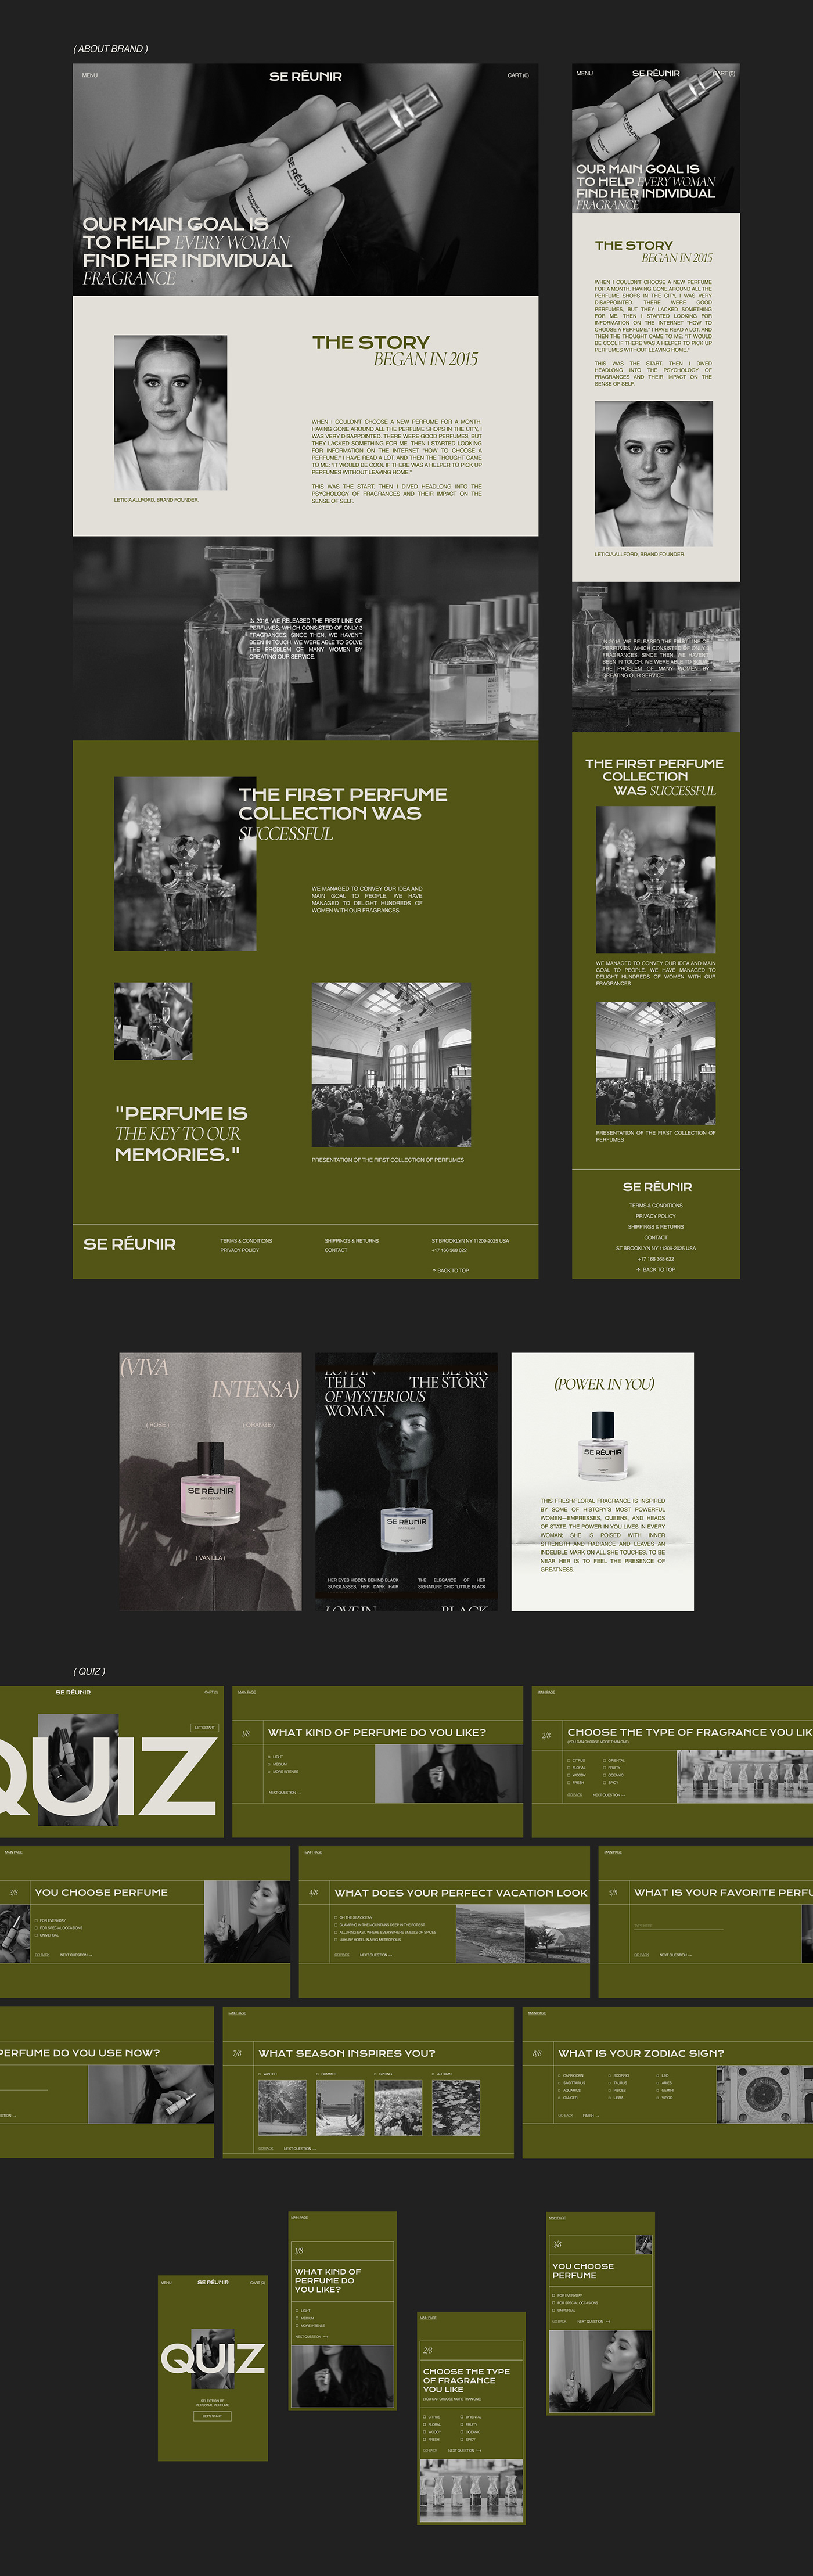 e-commerce perfume store shop cosmetics UX design Quiz mobile user interface ui design